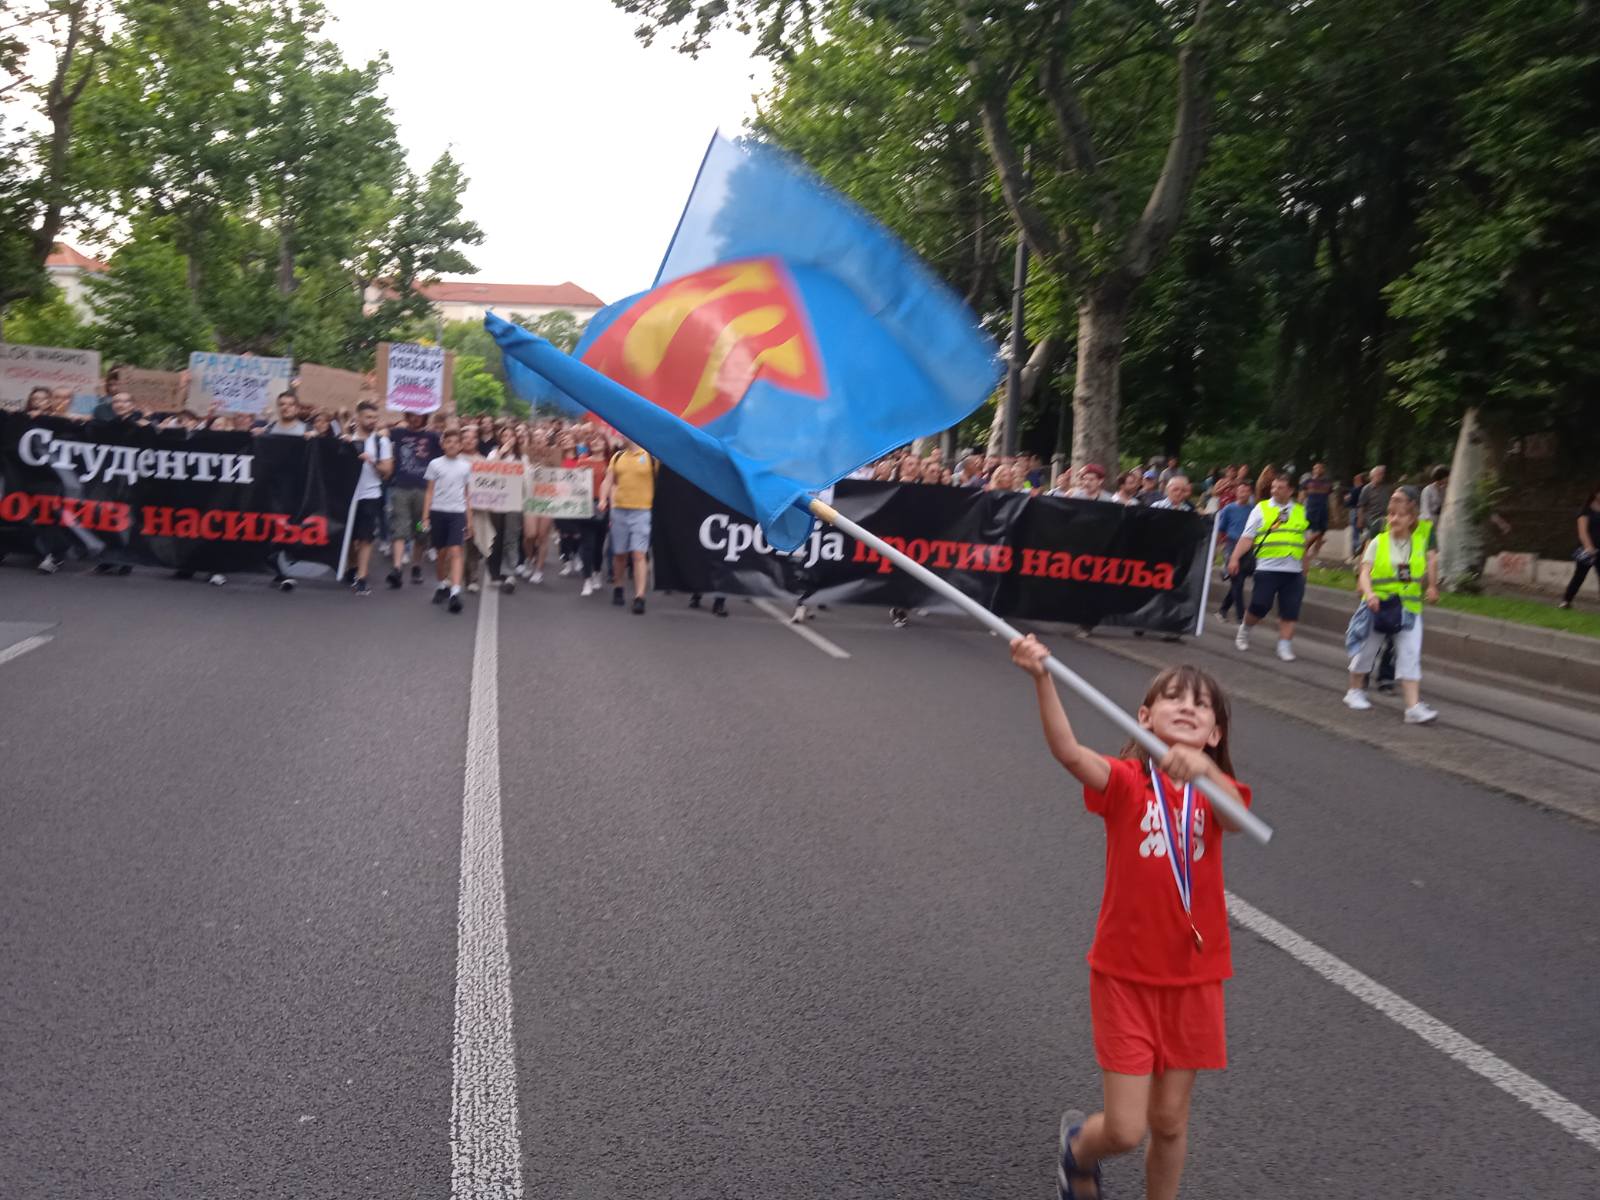 Protest "Srbija protiv nasilja" u preko 10 gradova obeležile šetnje, blokade puteva i zahtevi za ostavkama (FOTO, VIDEO) 16